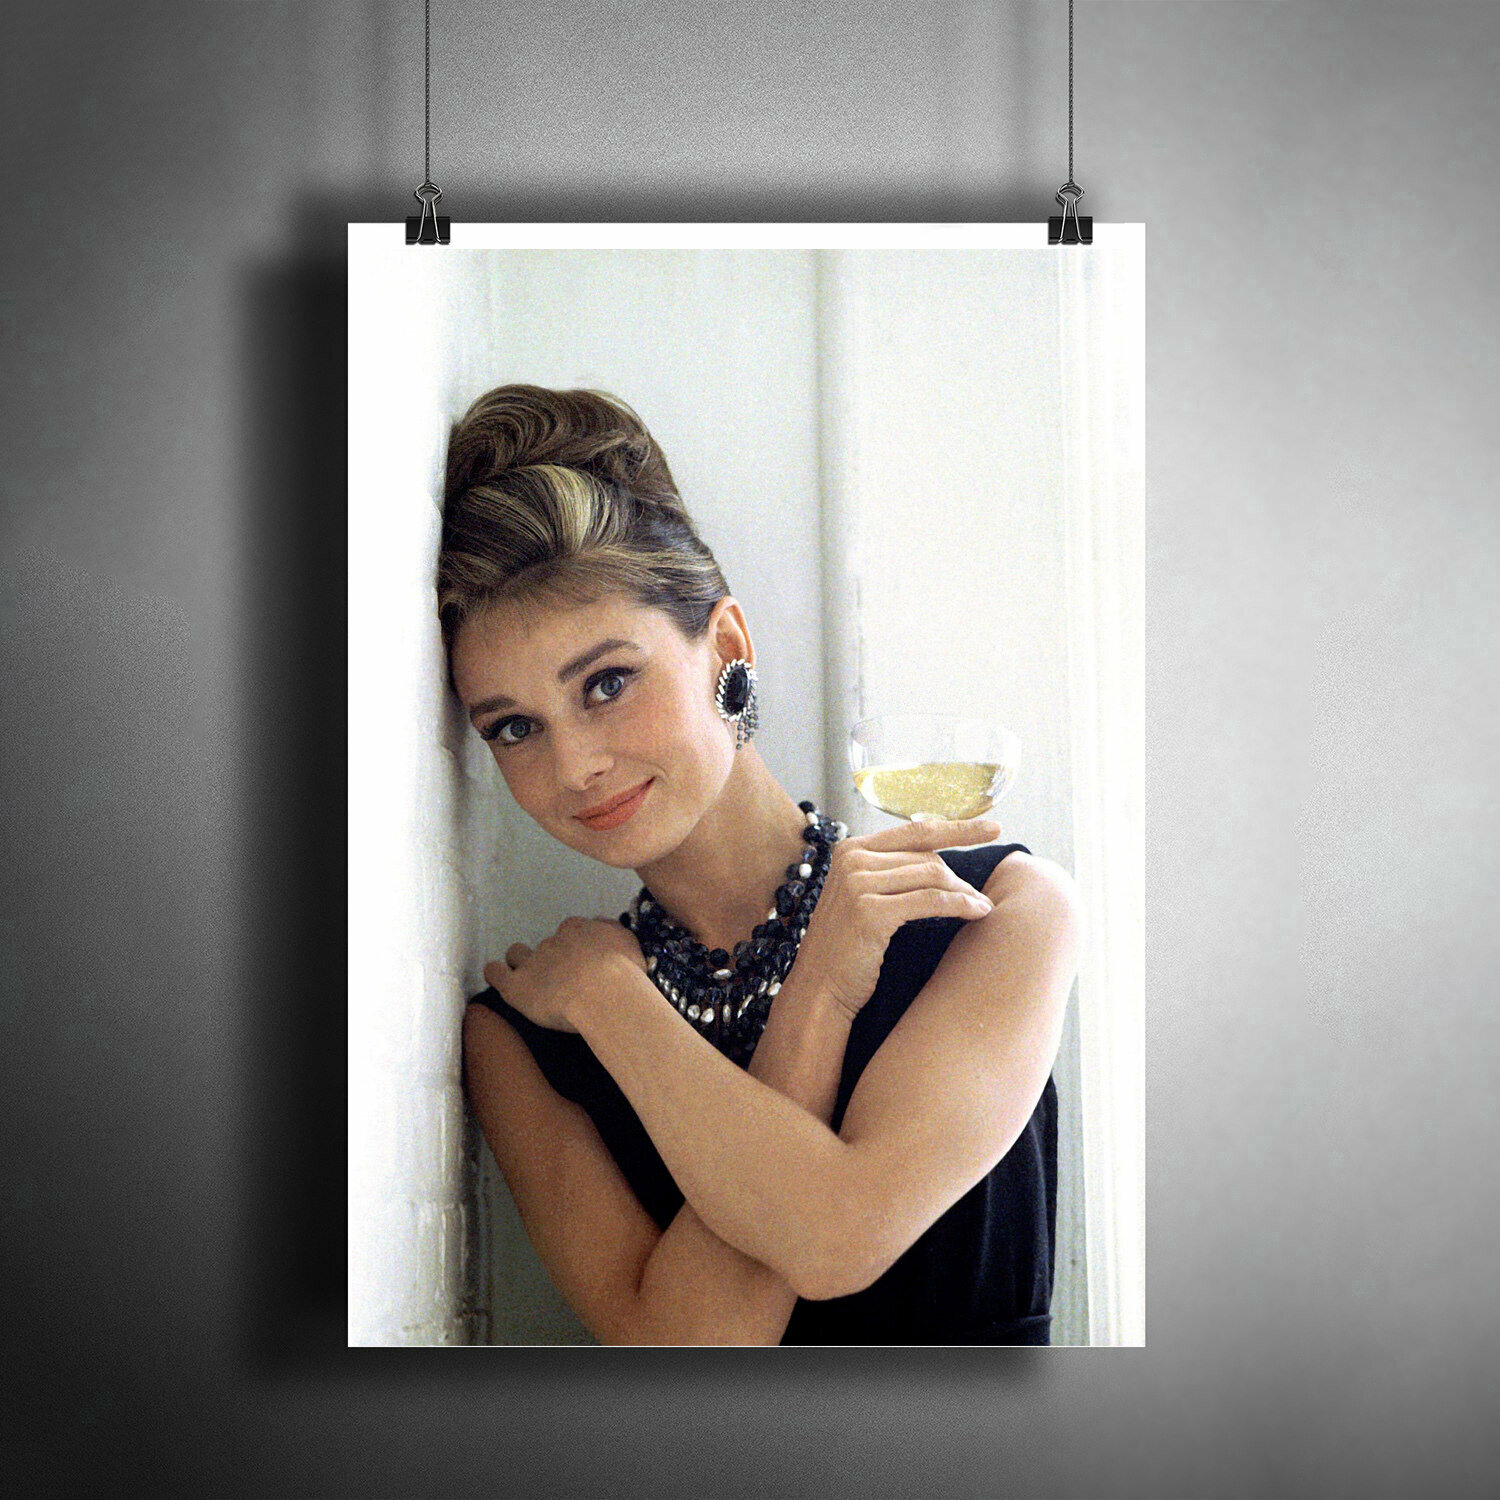 Постер плакат для интерьера "Британская актриса Одри Хепбёрн. Audrey Hepburn" / Декор дома, офиса, комнаты, квартиры A3 (297 x 420 мм)